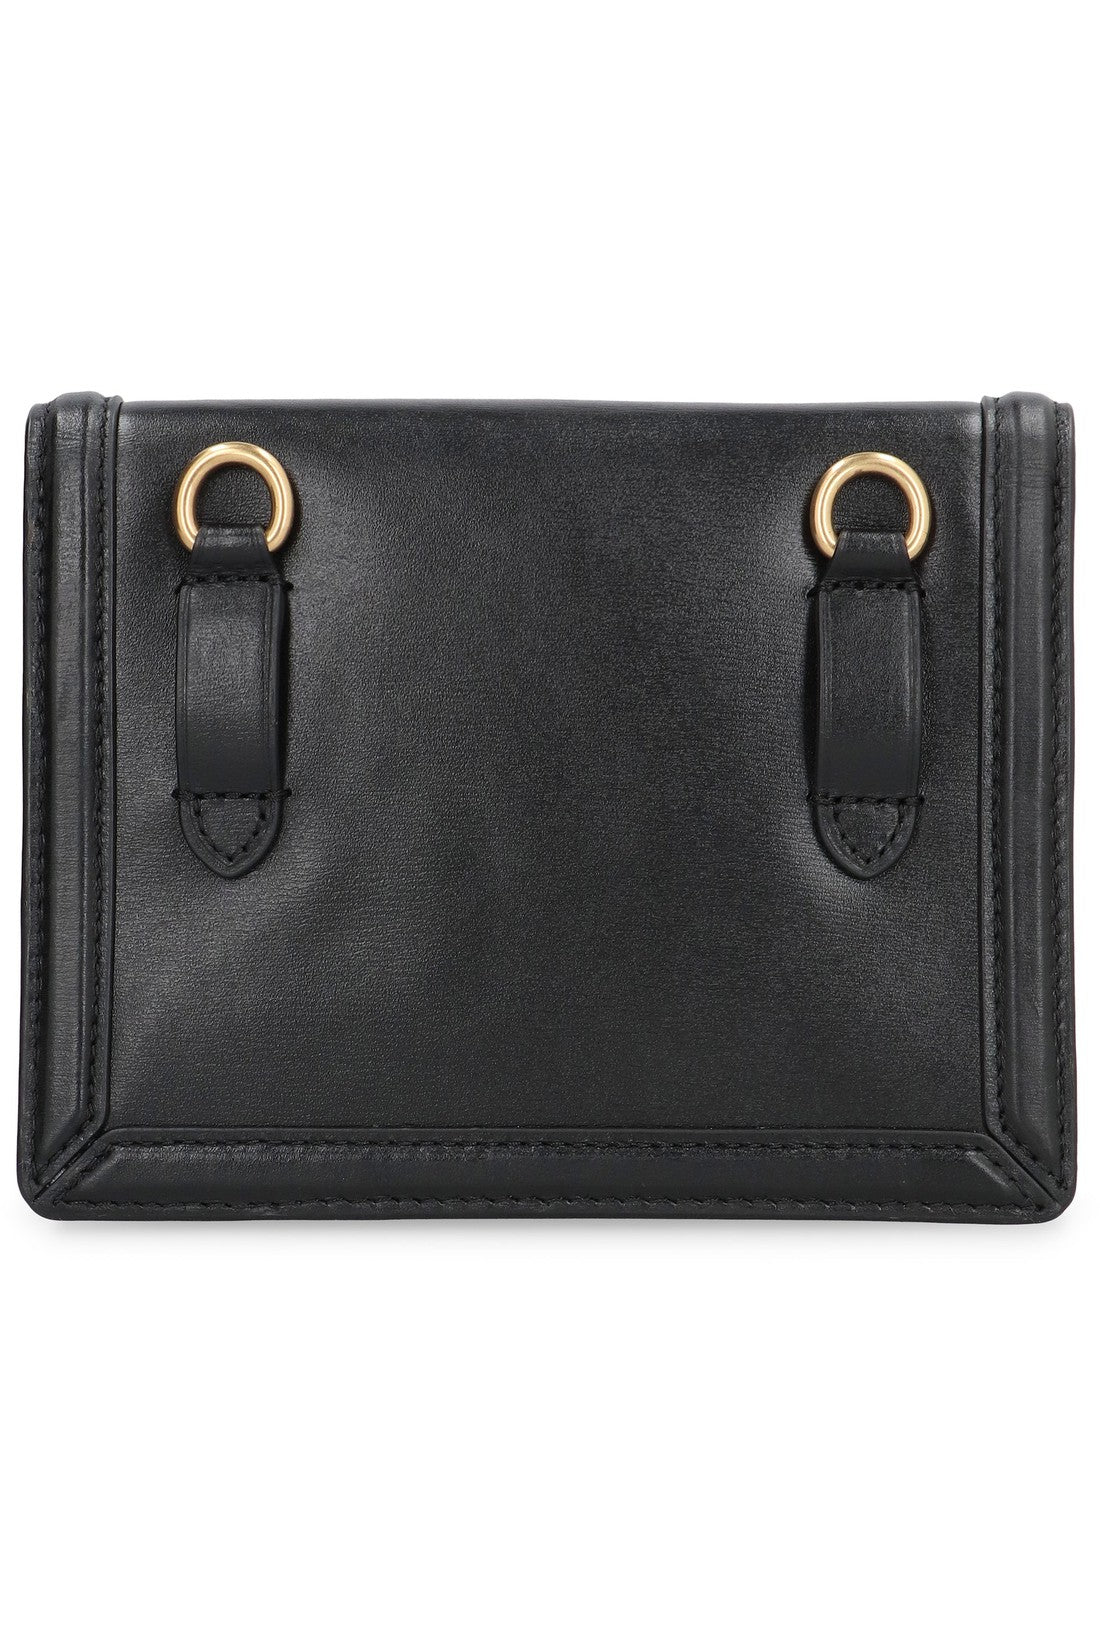 Coach-OUTLET-SALE-Hutton leather wallet on chain-ARCHIVIST